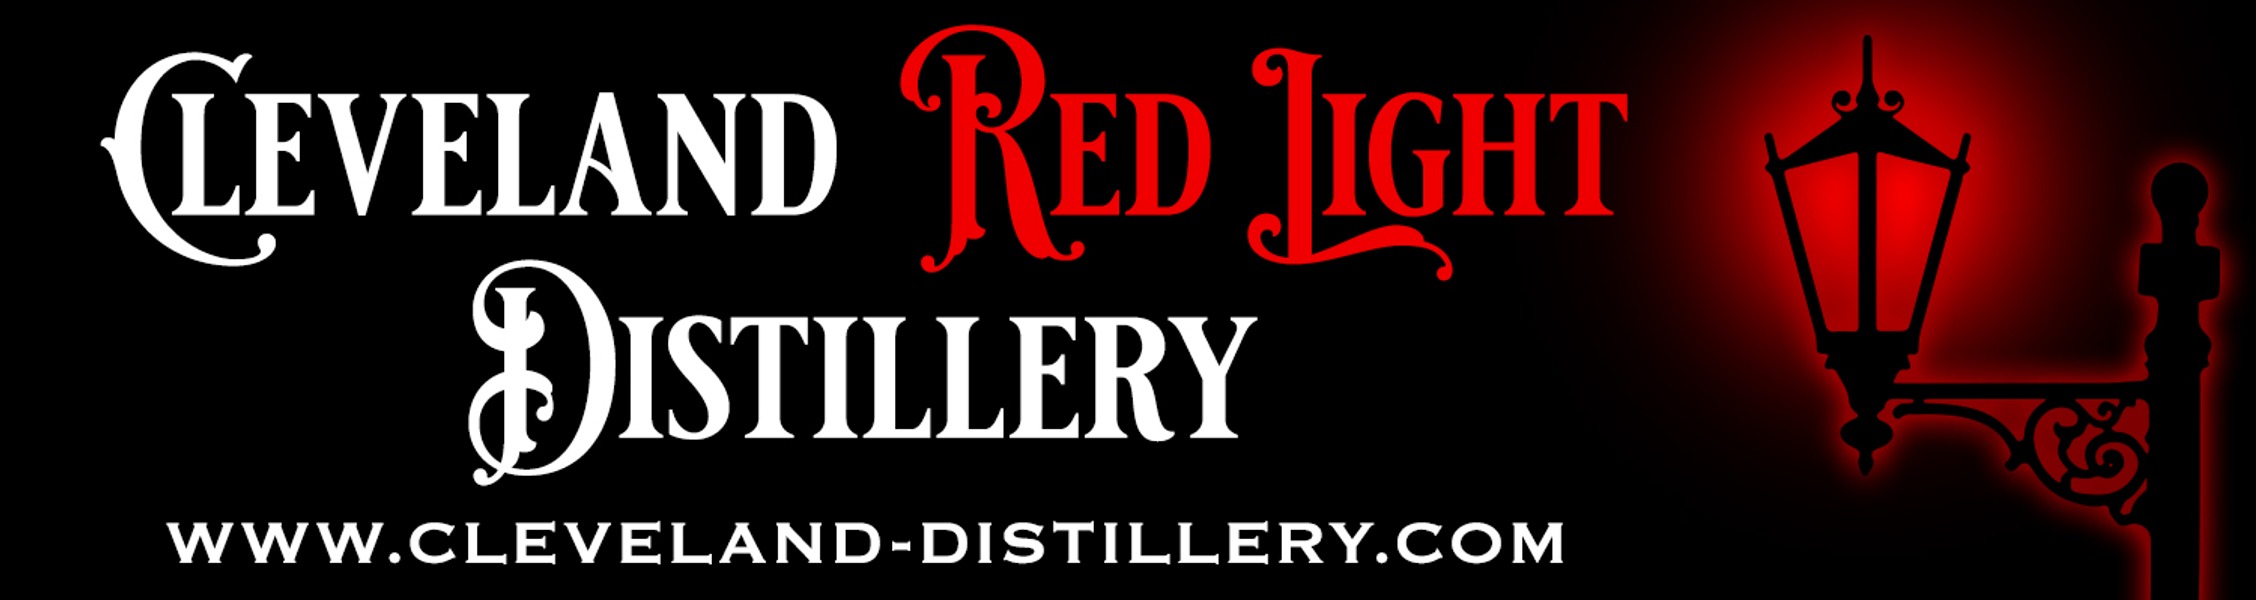 Brand for Cleveland Red Light Distillery